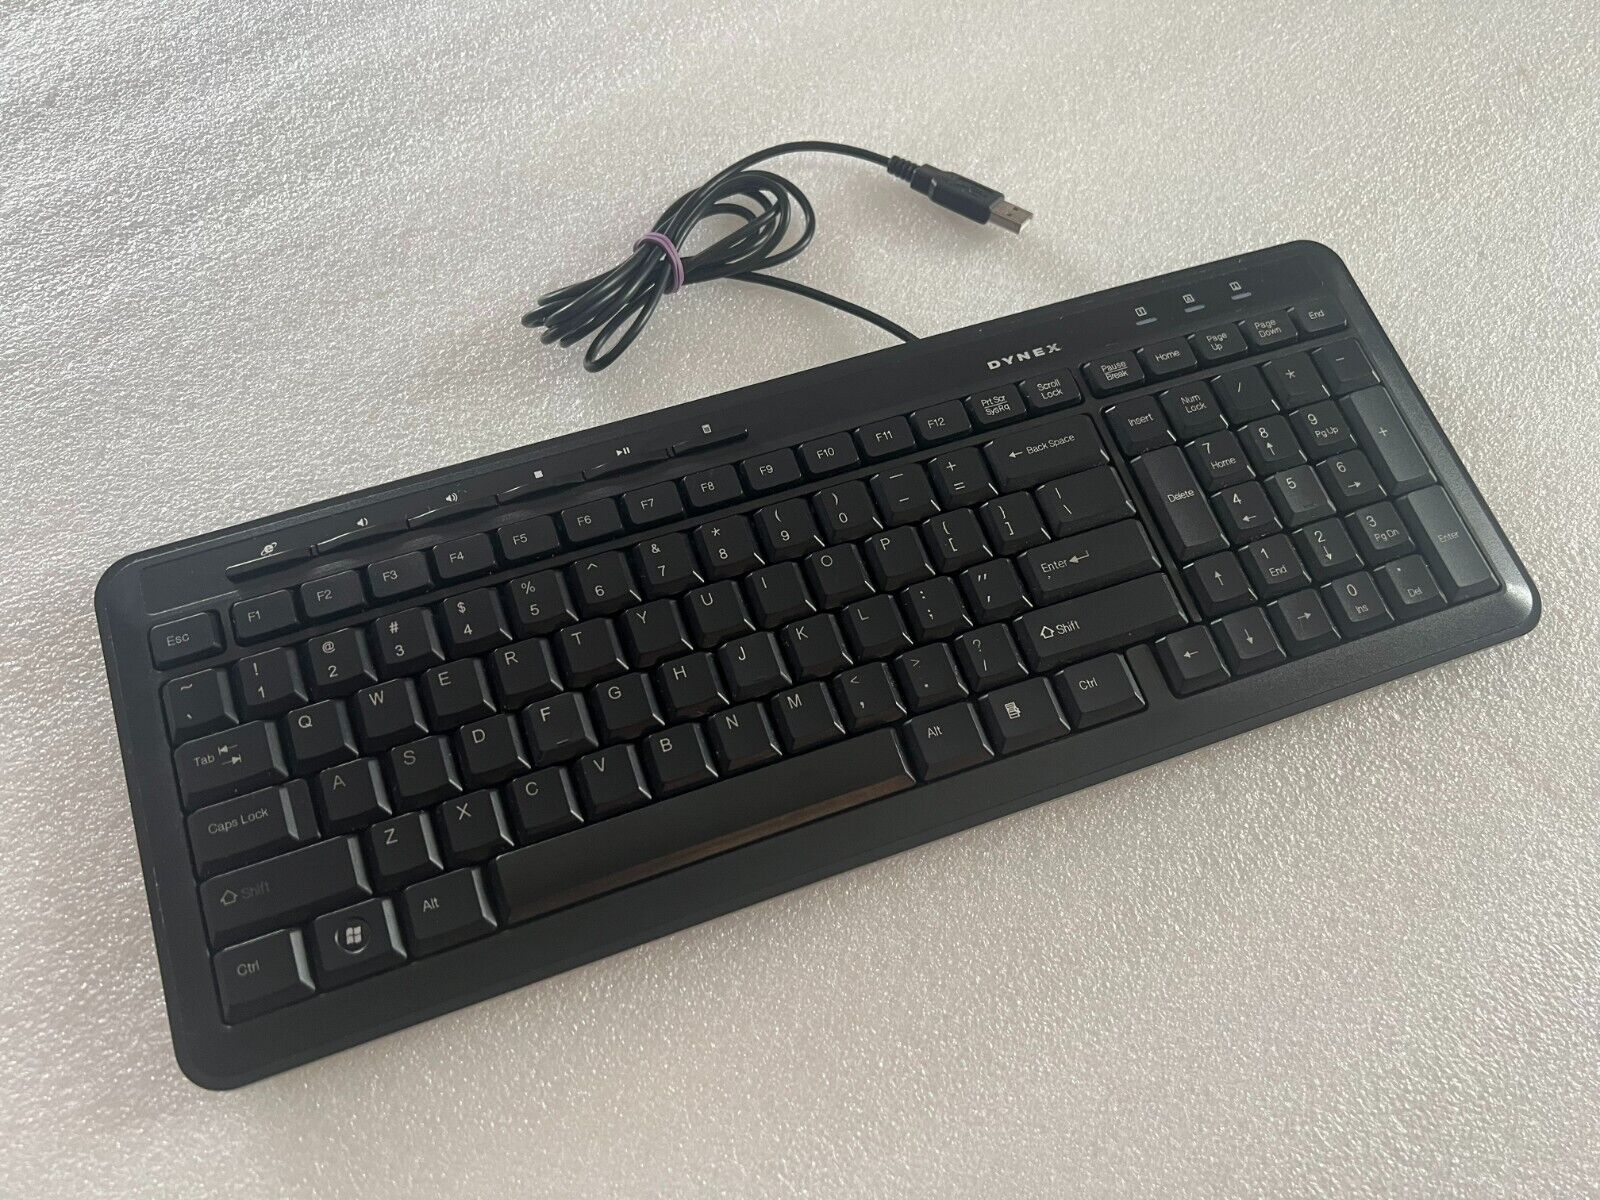 LIKE ITS NEW Dynex DX-WKBDSL Keyboard USB Wired Computer Black Slim Desktop